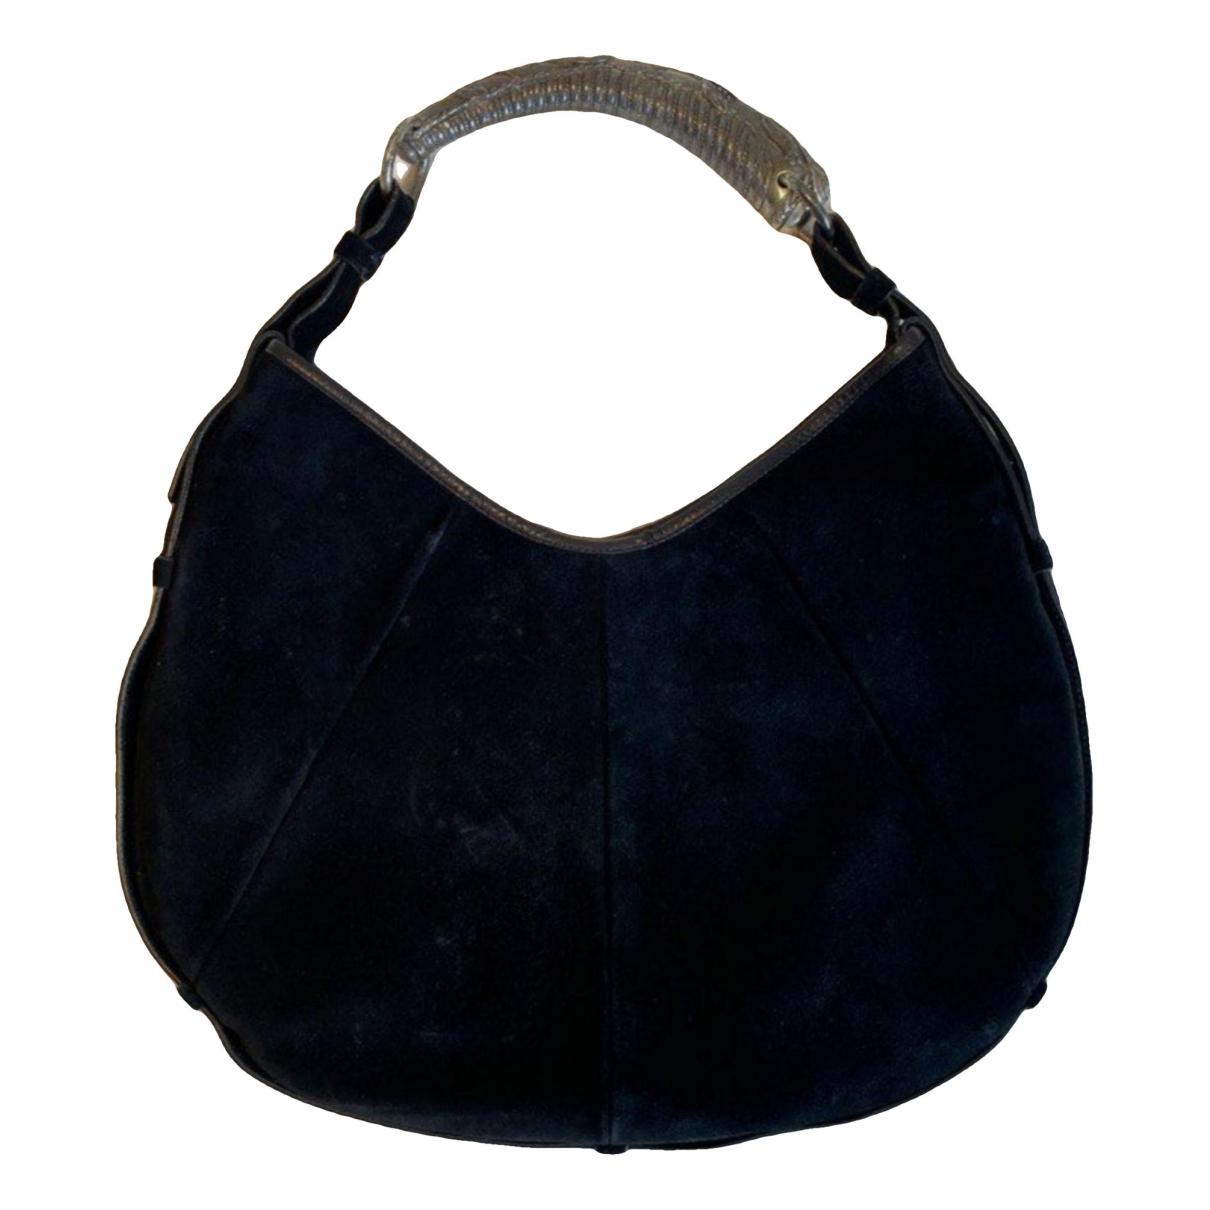 Mombasa handbag Yves Saint Laurent Black in Suede - 35396334